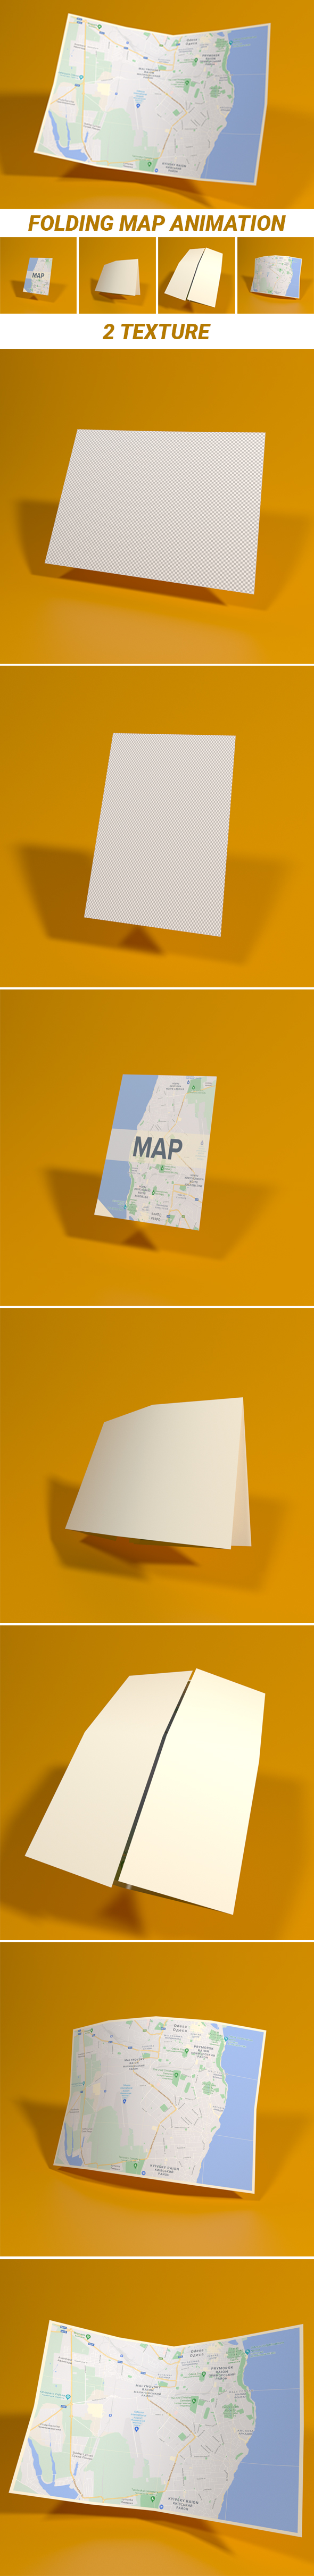 Folding Map Animation - 3Docean 33334850